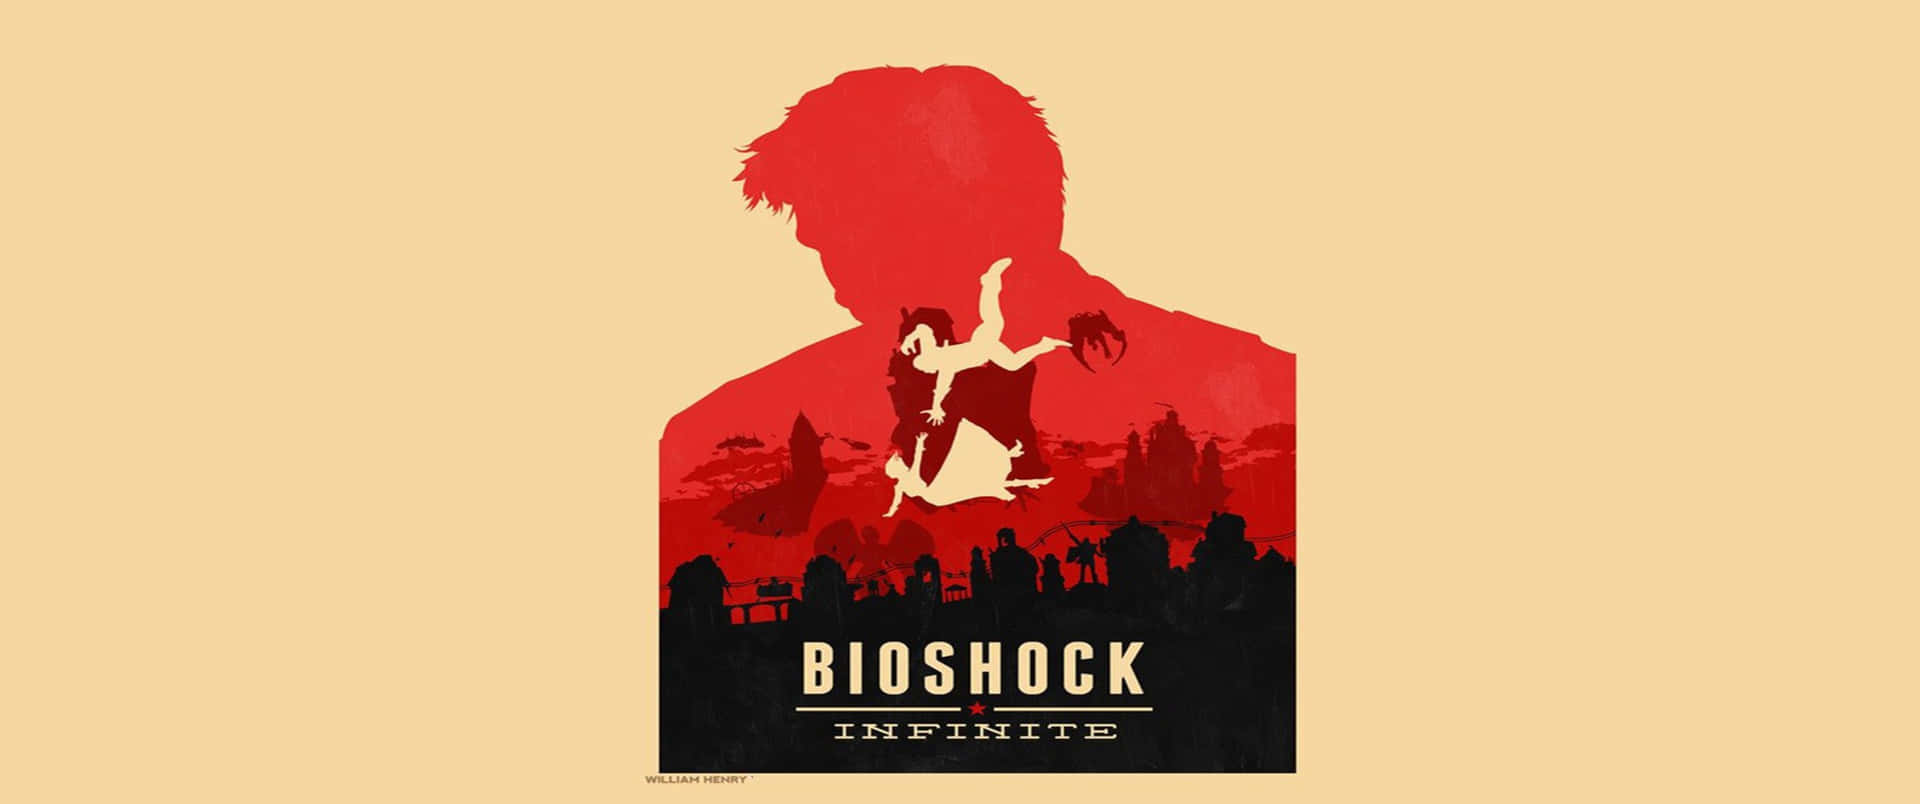 Siluetade Booker Fondo De Pantalla Bioshock Infinite 3440x1440p